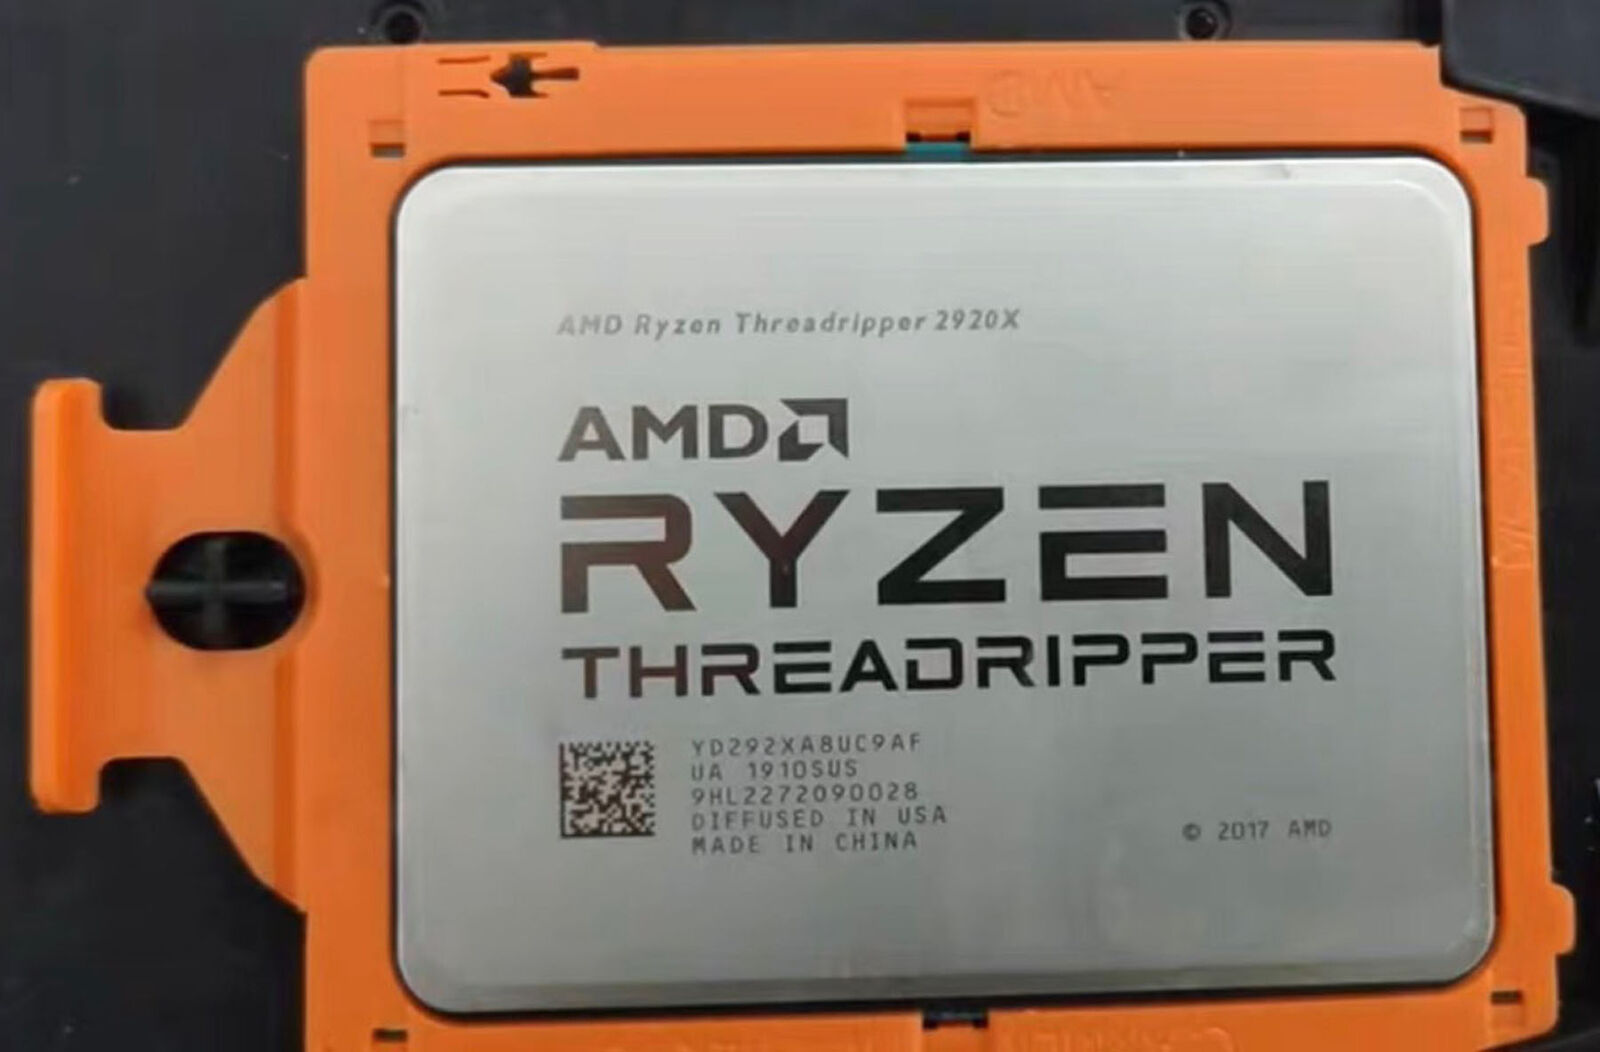 AMD Ryzen Threadripper 2920x 12-core 24-thread 3.50GHz tr4 180W CPU processor